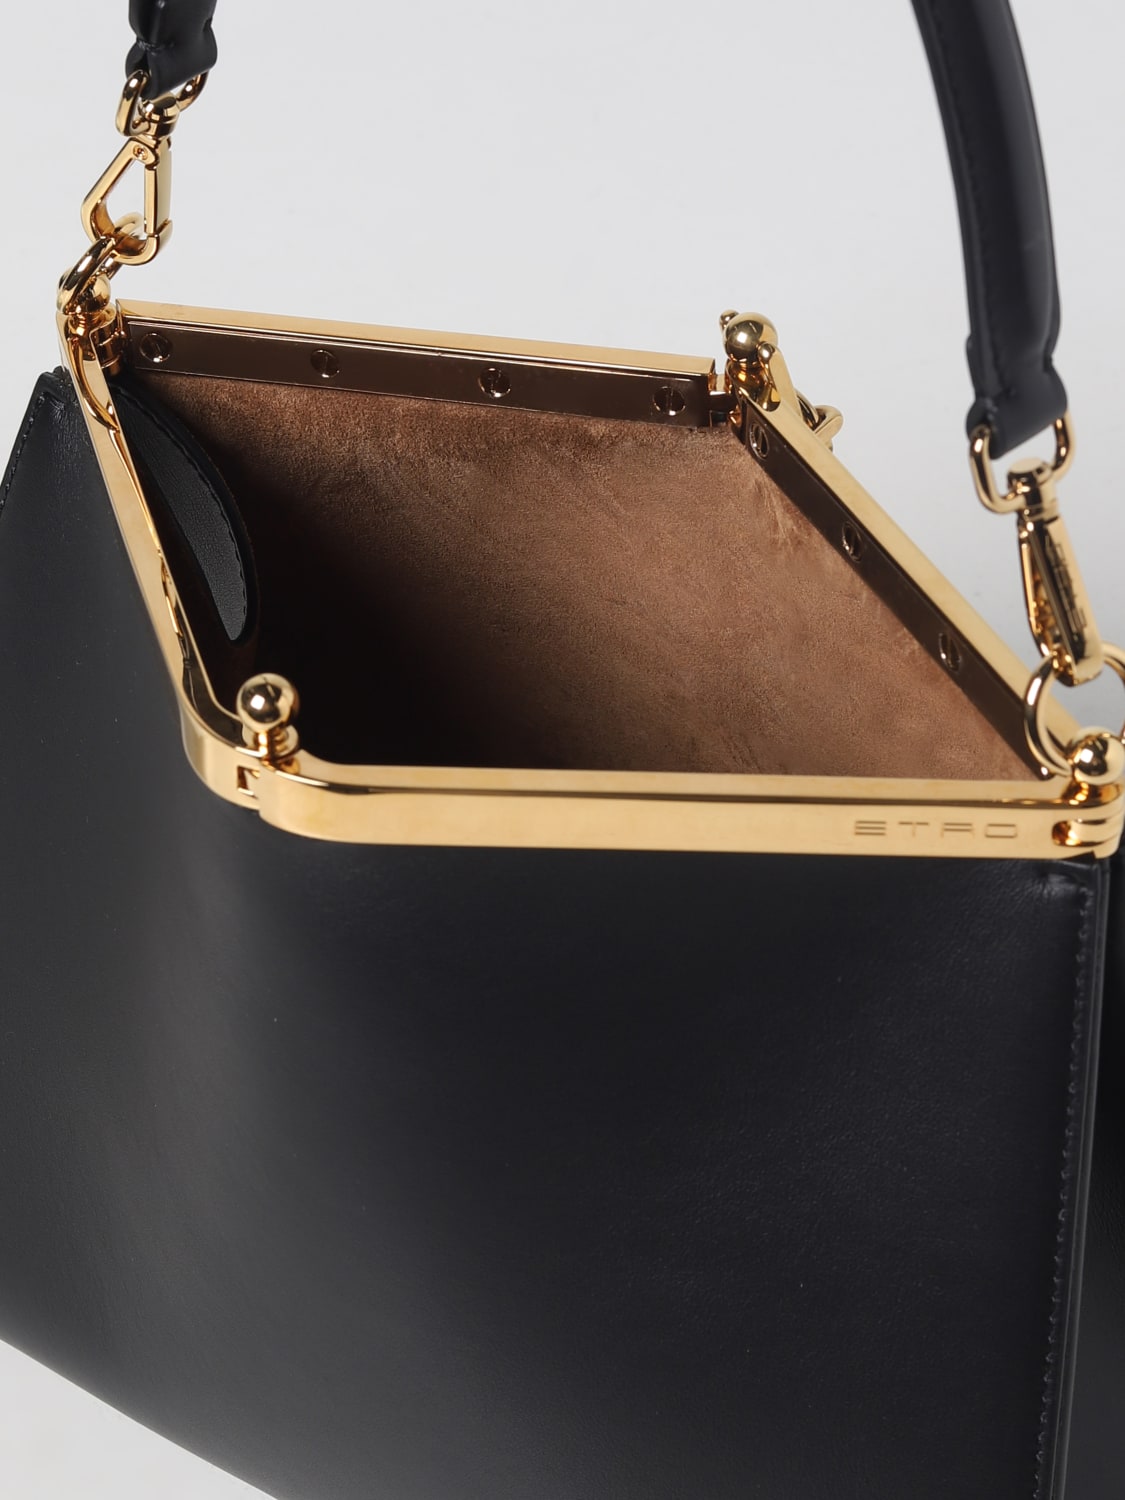 ETRO: Vela bag in leather with logo charm - Brown  Etro shoulder bag  1P0252192 online at